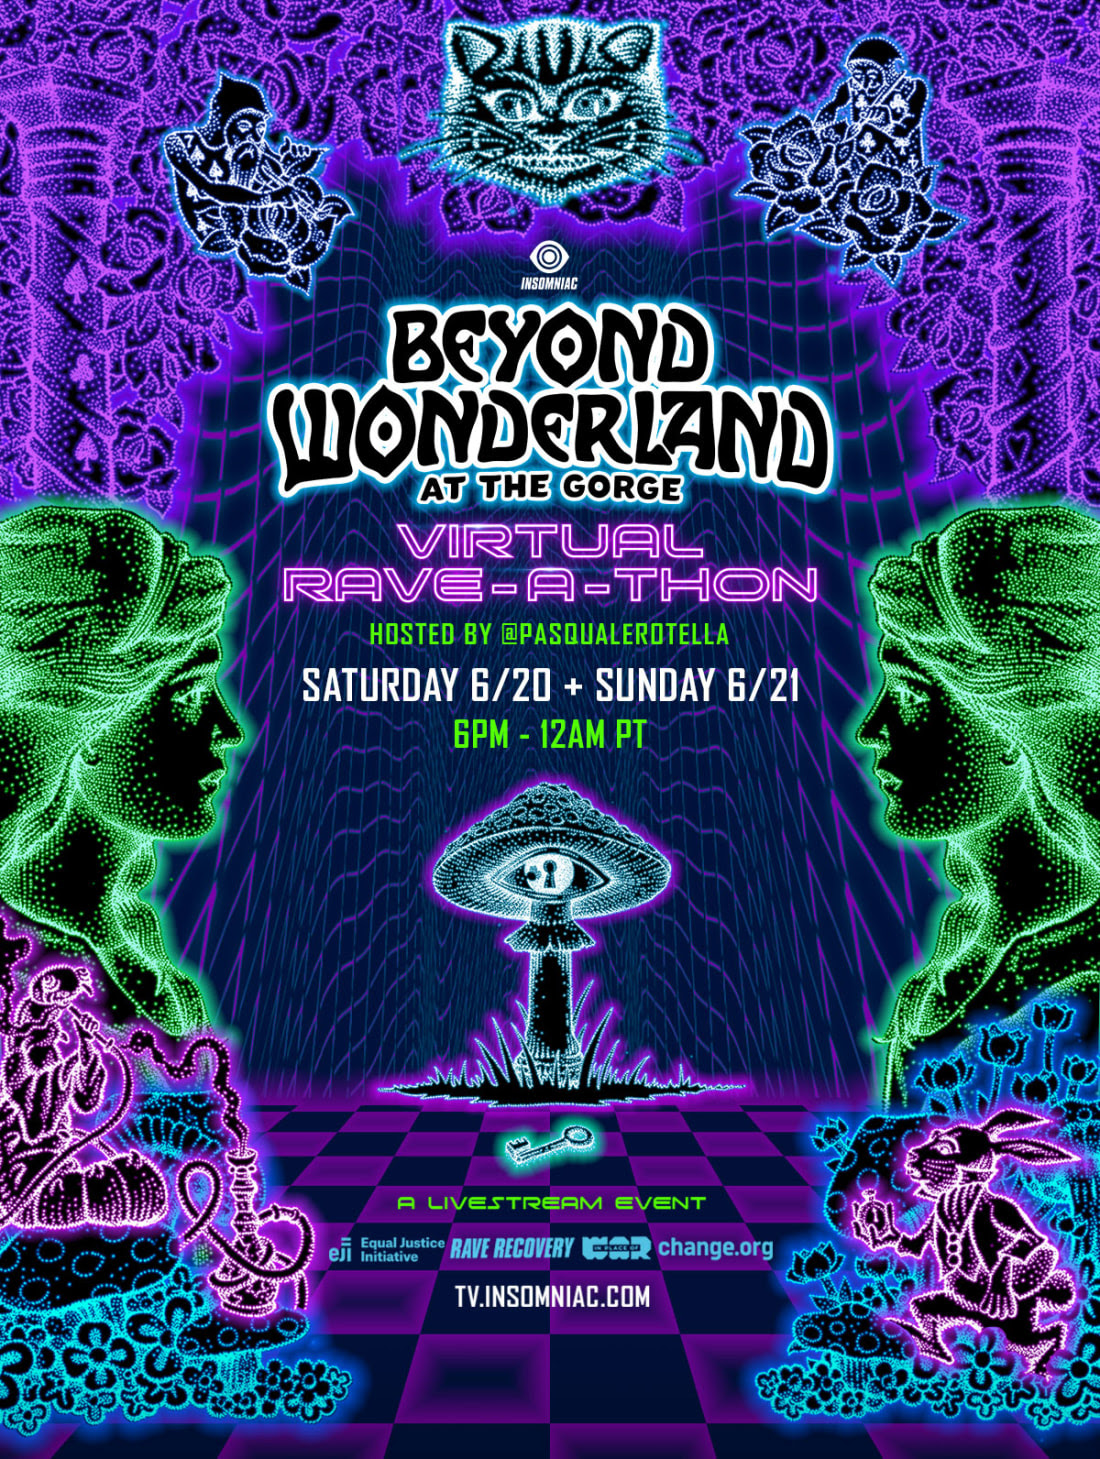 Beyond Wonderland PNW: Virtual RaveAThon